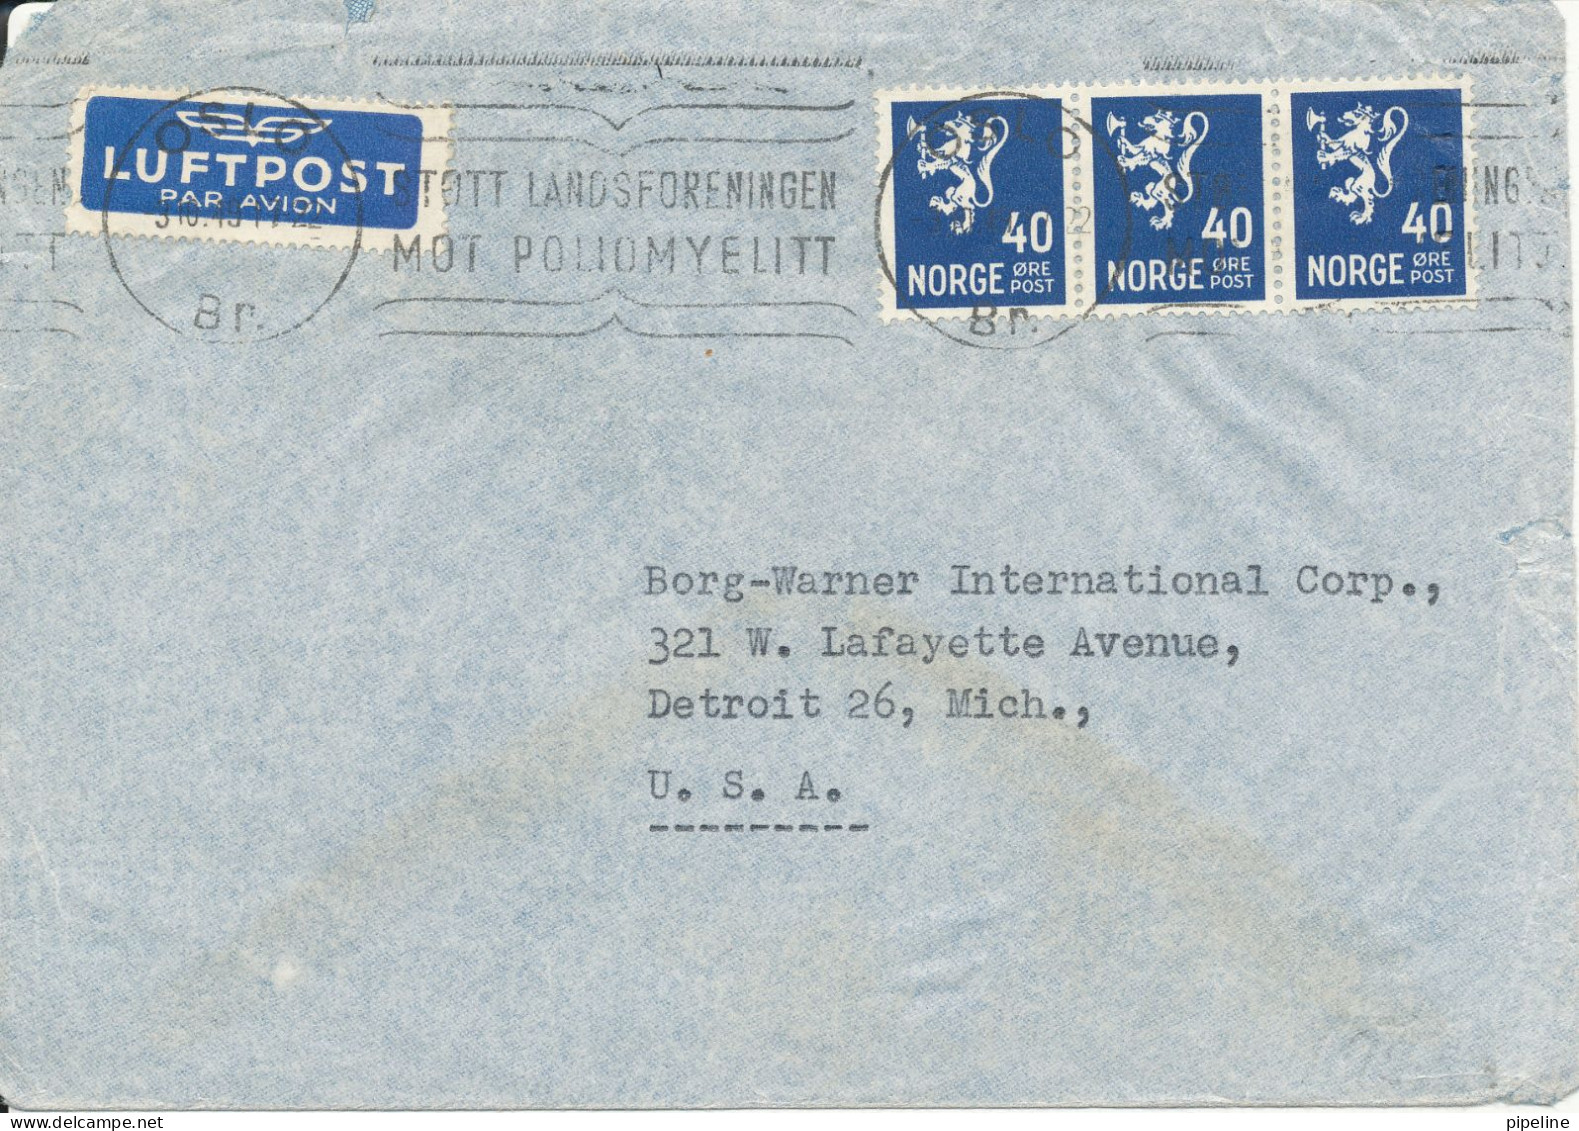 Norway Air Mail Cover Sent To USA 3-10-1949 (Stött Landsforeningen Mot Poliomyelitt) (A/S Norge Rollator Oslo) - Lettres & Documents